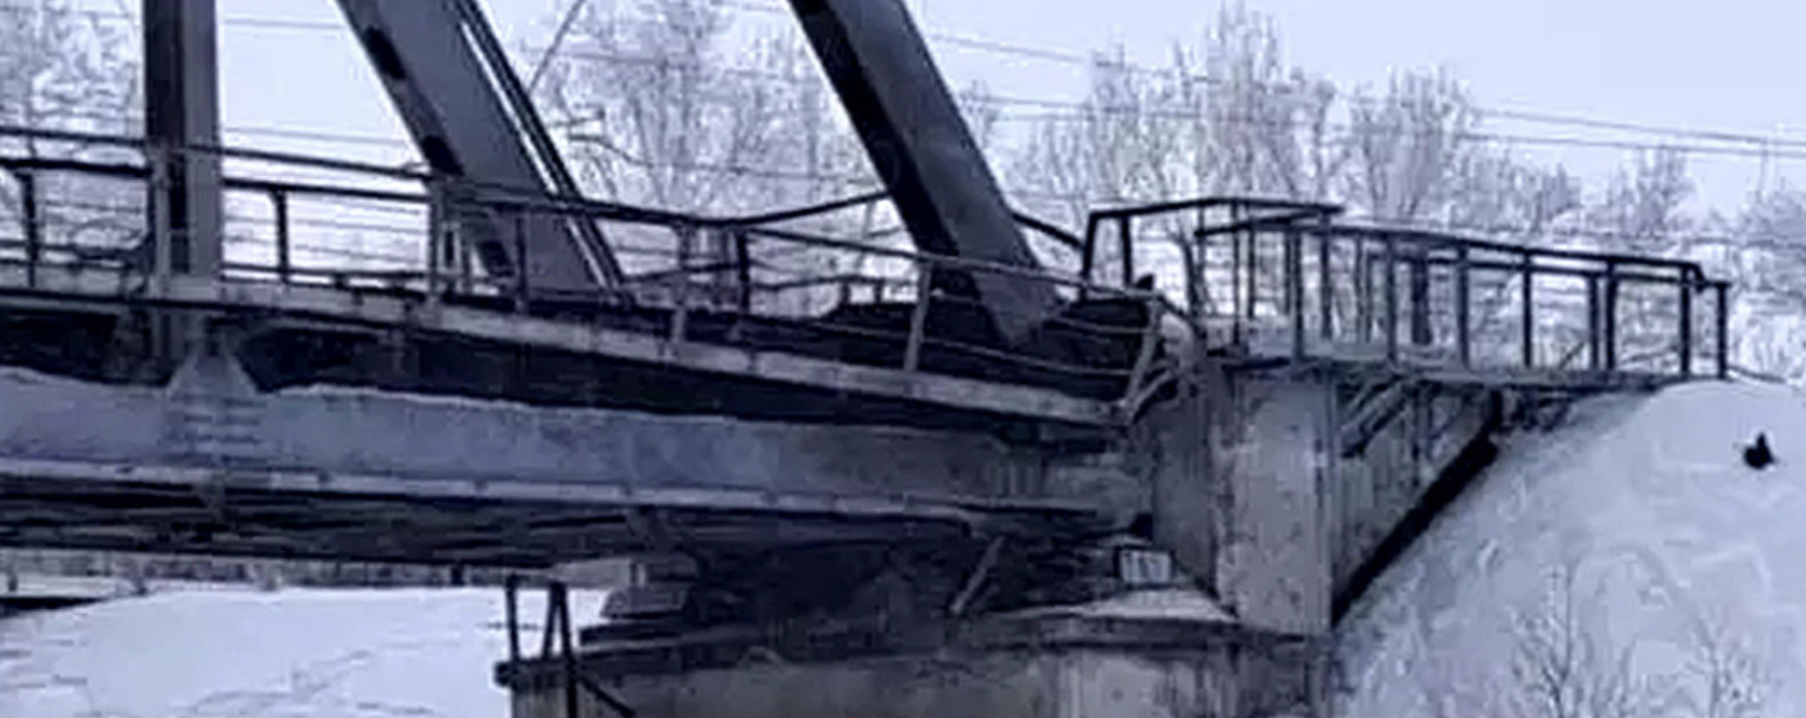 Rail Traffic in Russia’s Samara Region Suspended After Bridge Explosion